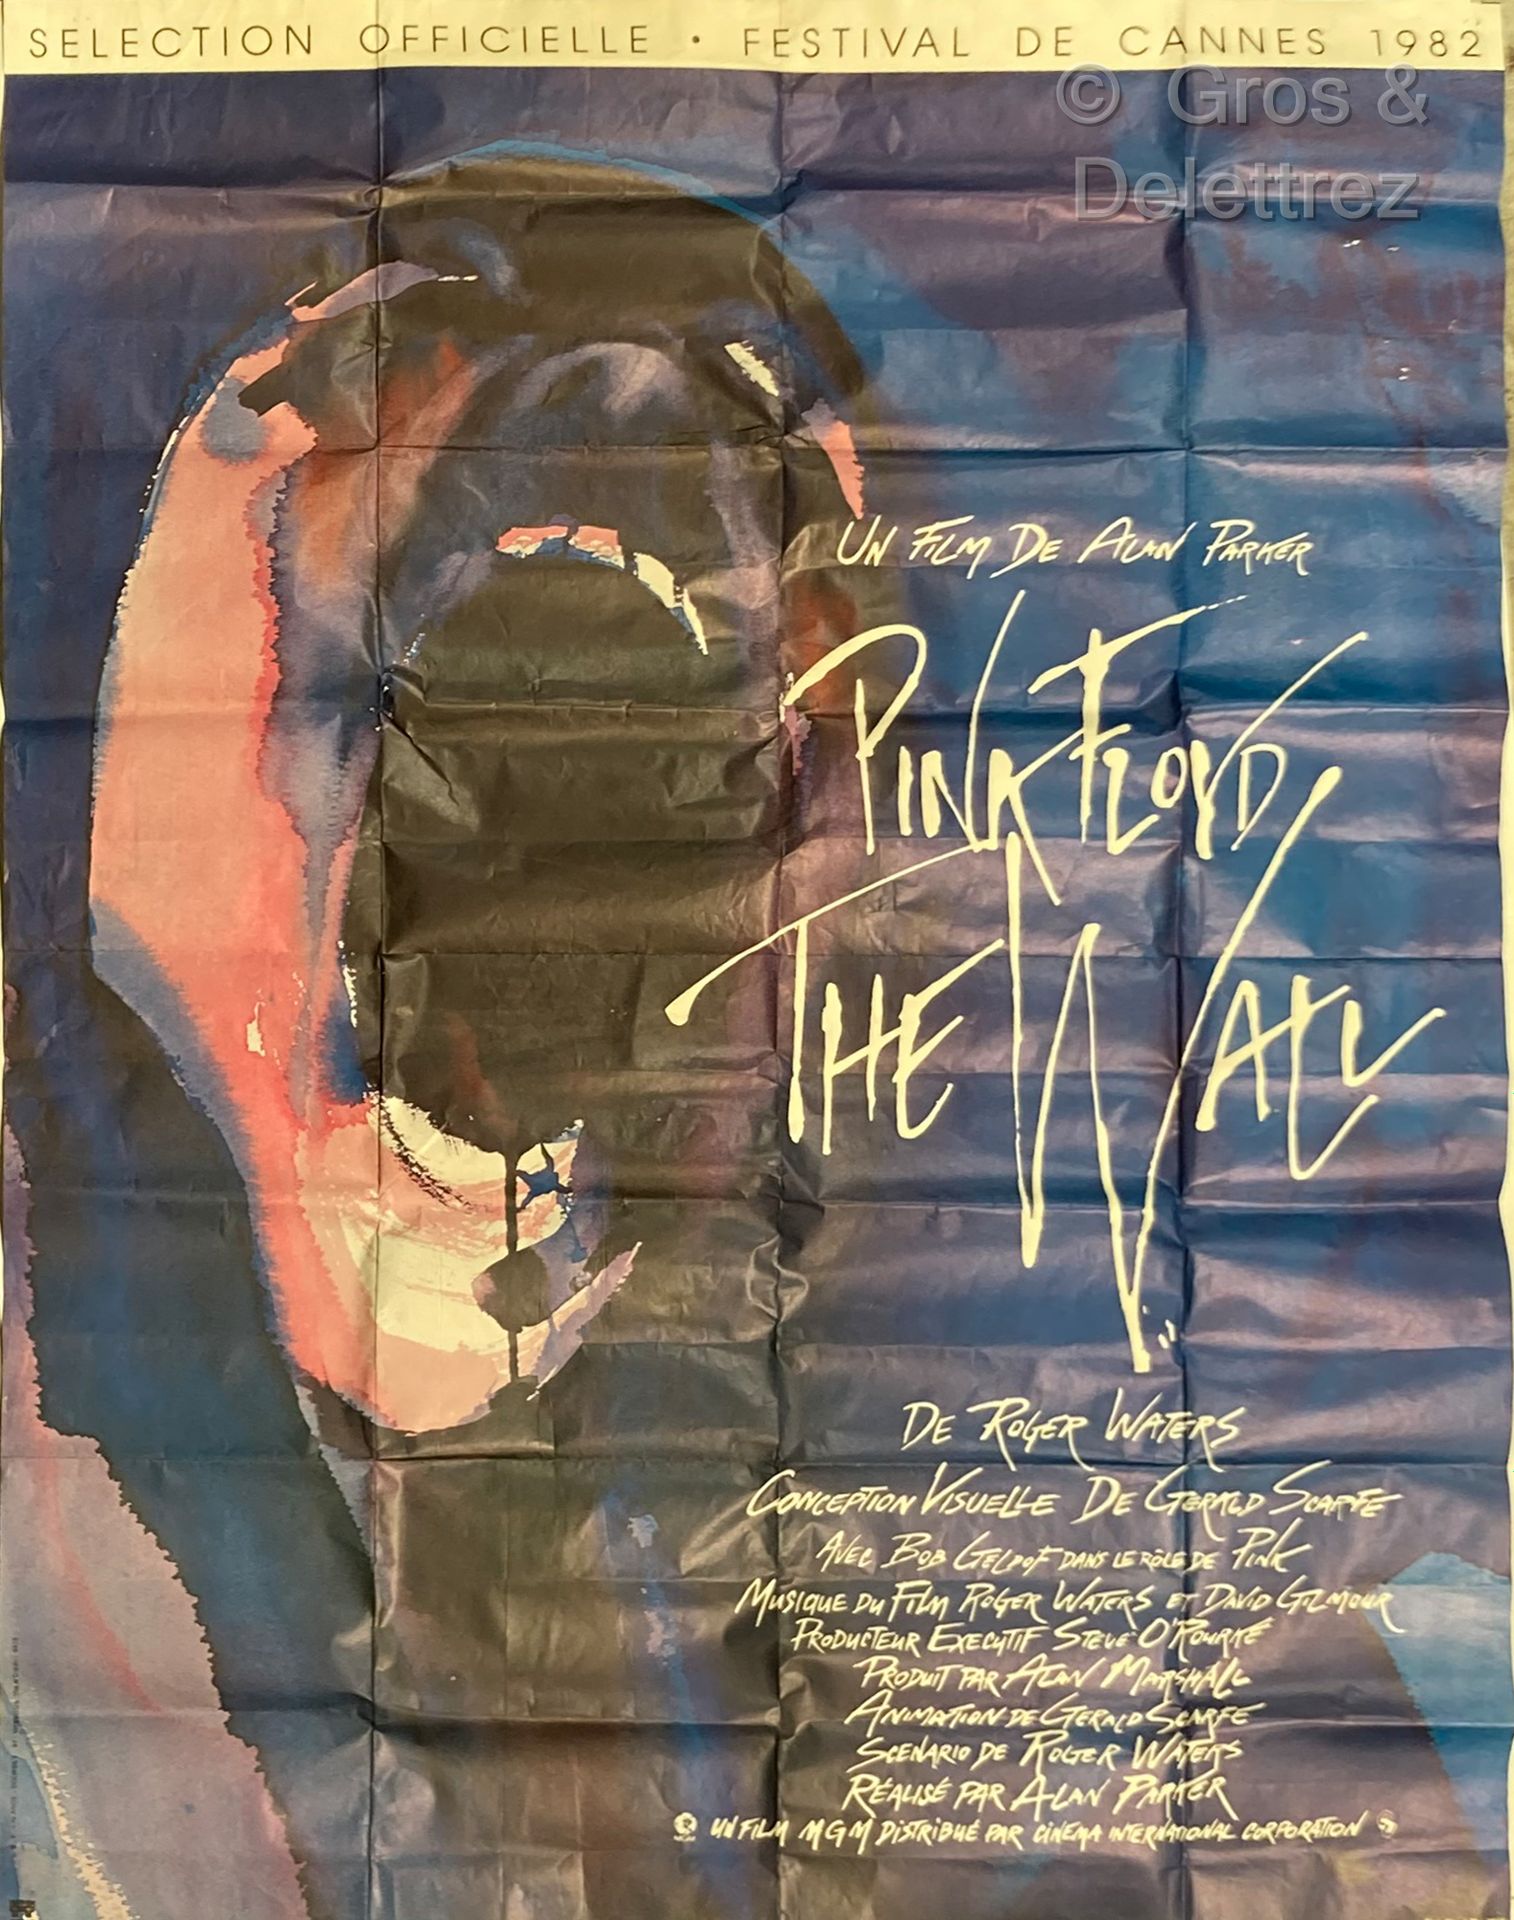 Roger Waters PINK FLOYD die Wand

Filmplakat

155 x 116 cm kleine Unfälle